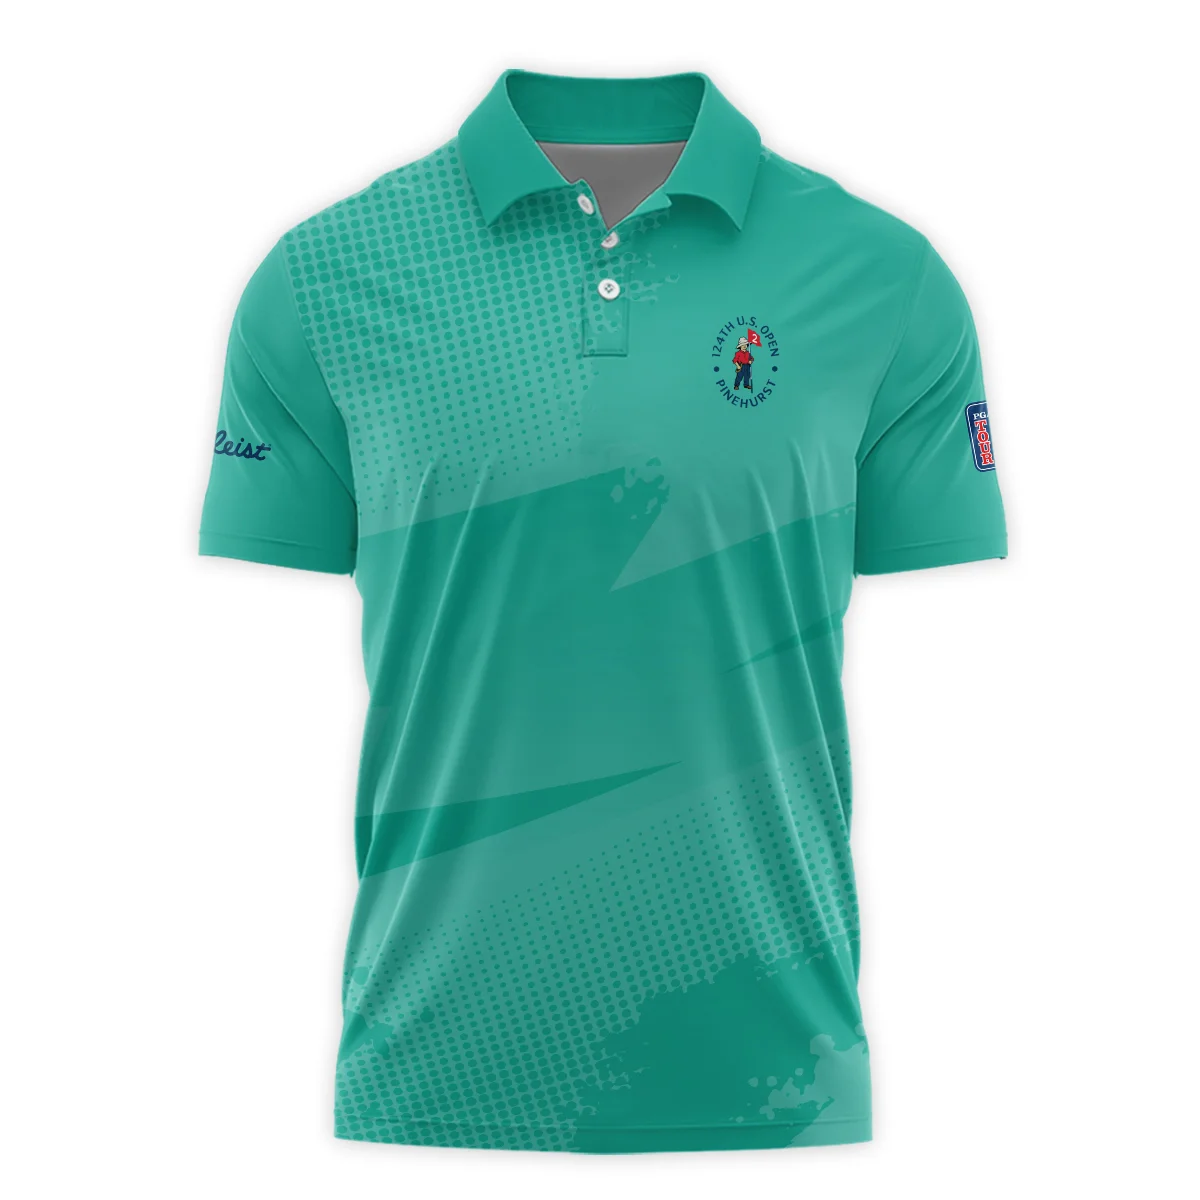 Golf Sport Pattern Green Mix Color 124th U.S. Open Pinehurst Titleist Zipper Polo Shirt Style Classic